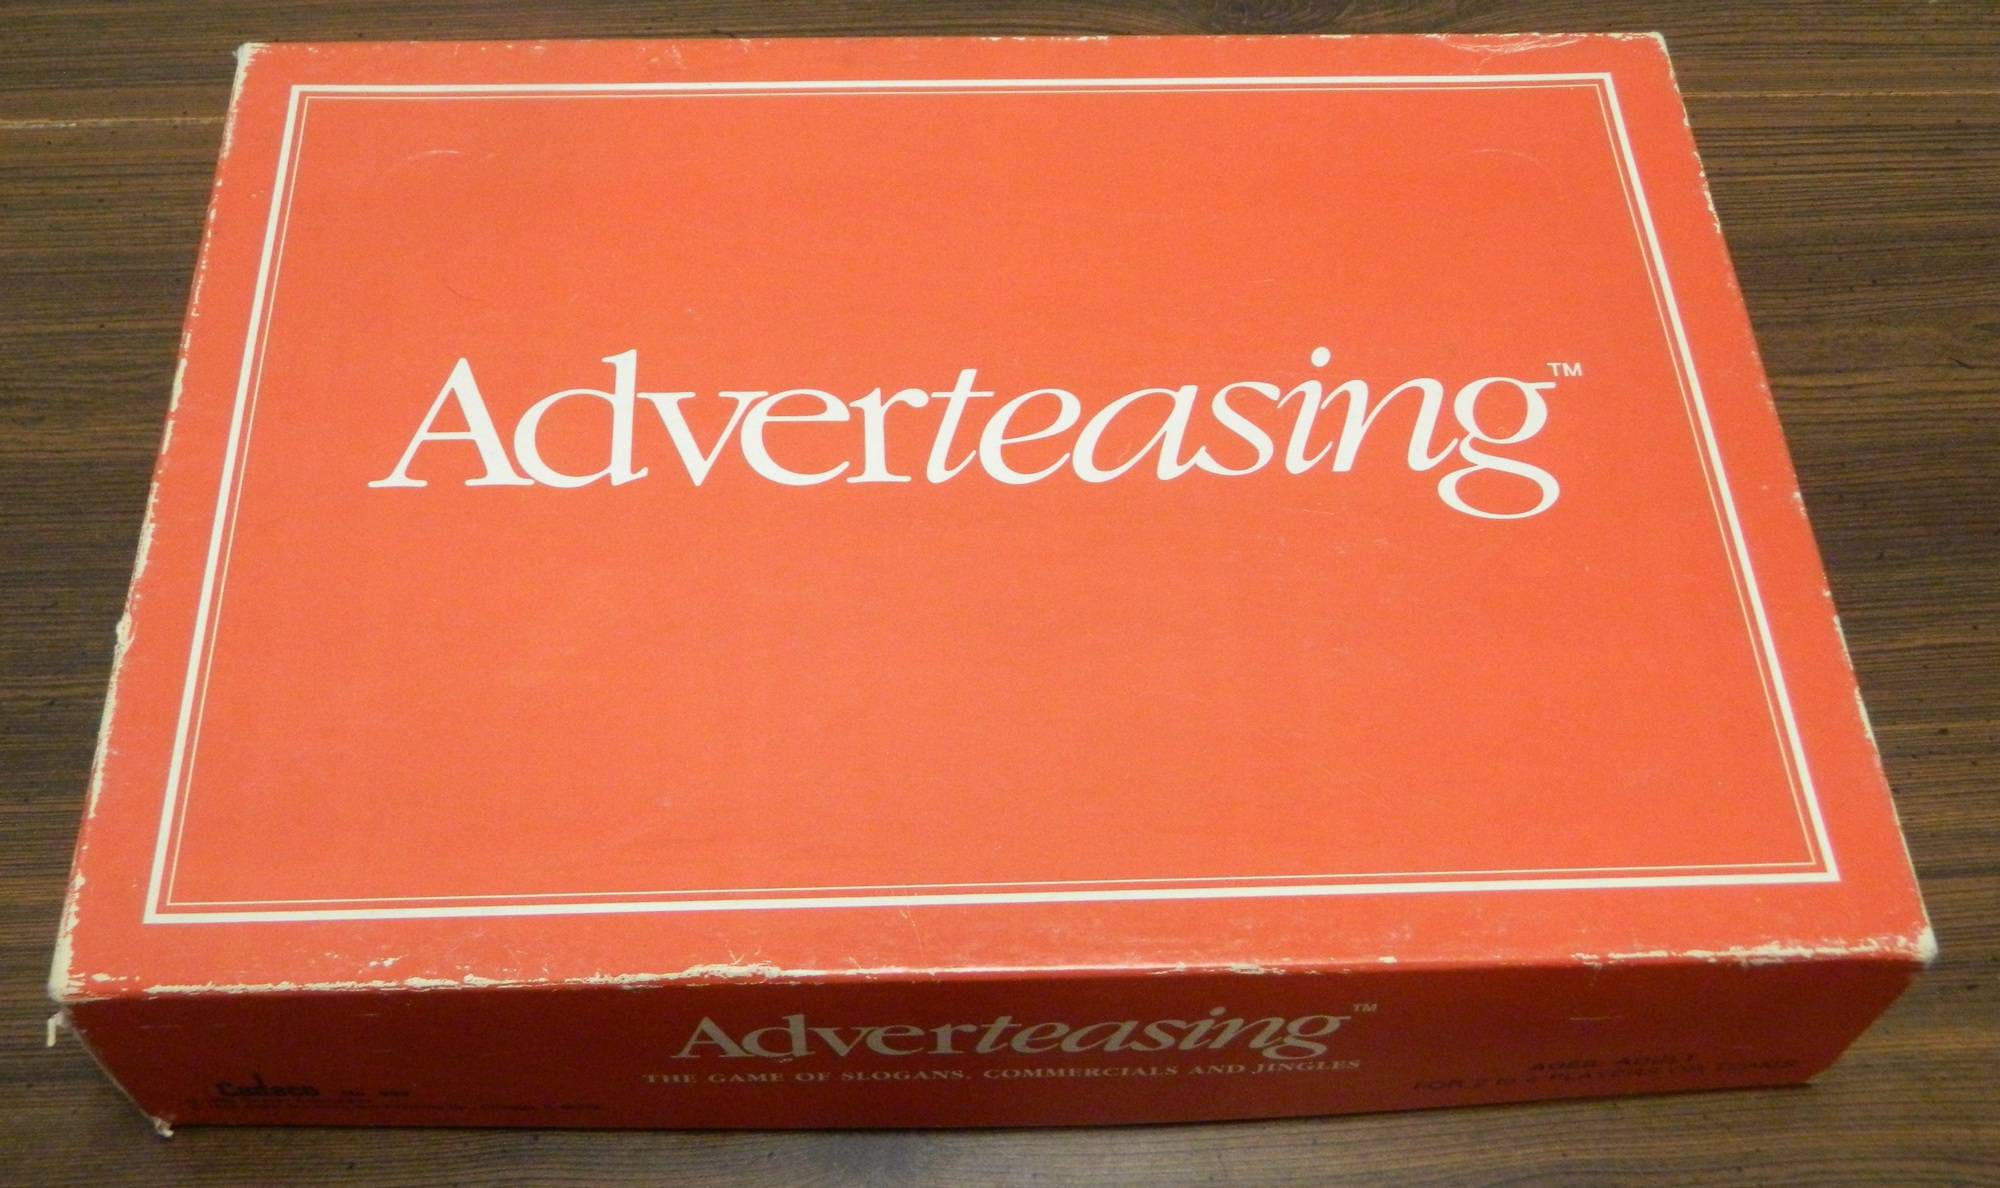 Box for Adverteasing